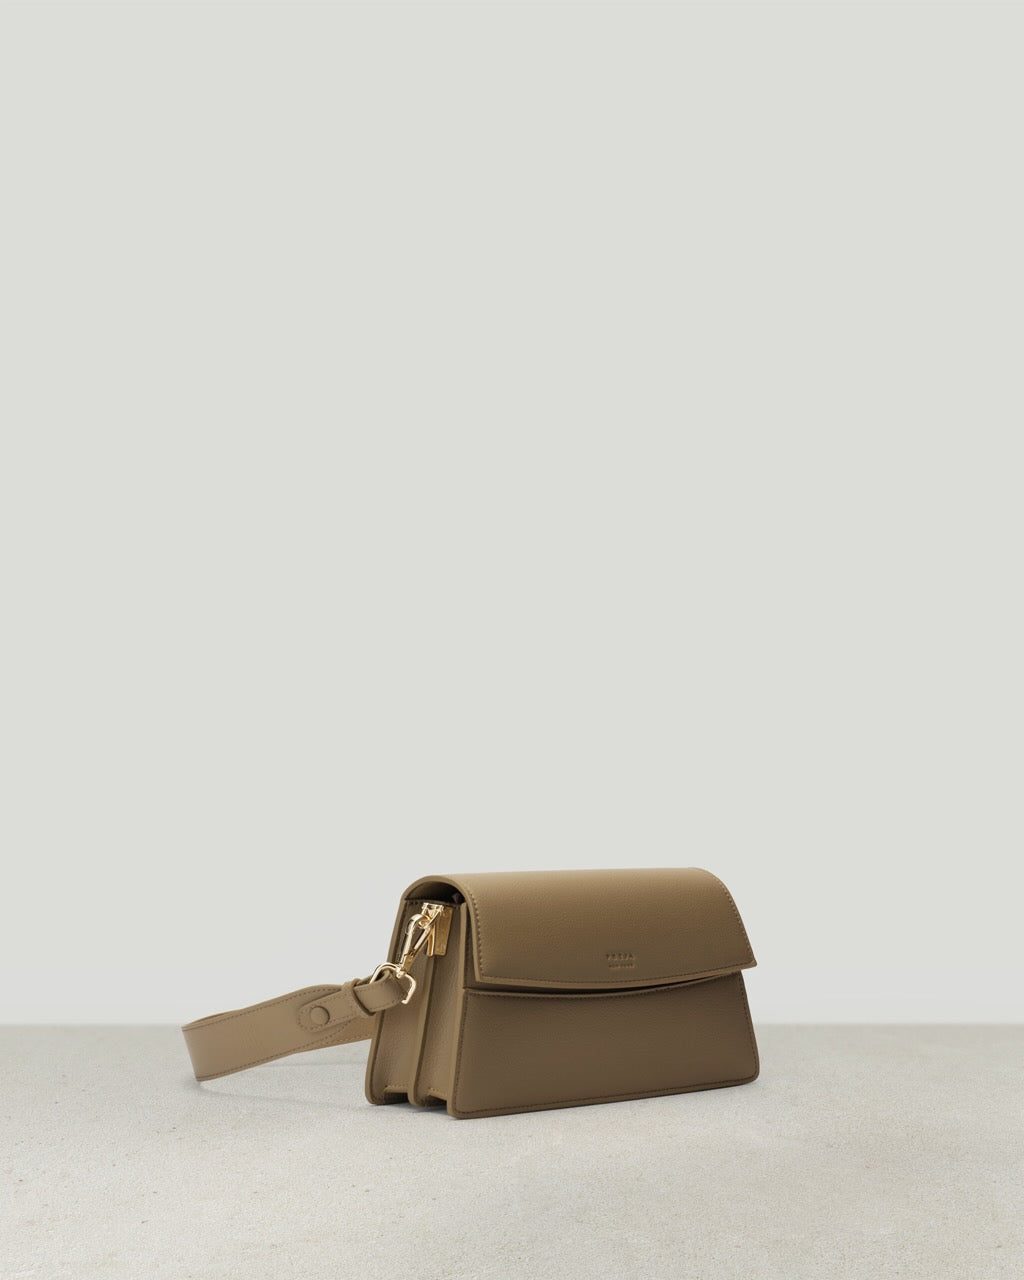 Freja - Mini Shoulder Bag - Taupe - Sleek, Minimal, and Sophisticated - Vegan Leather - 2 Ways to Wear: Shoulder / Crossbody Bag - Sustainable 